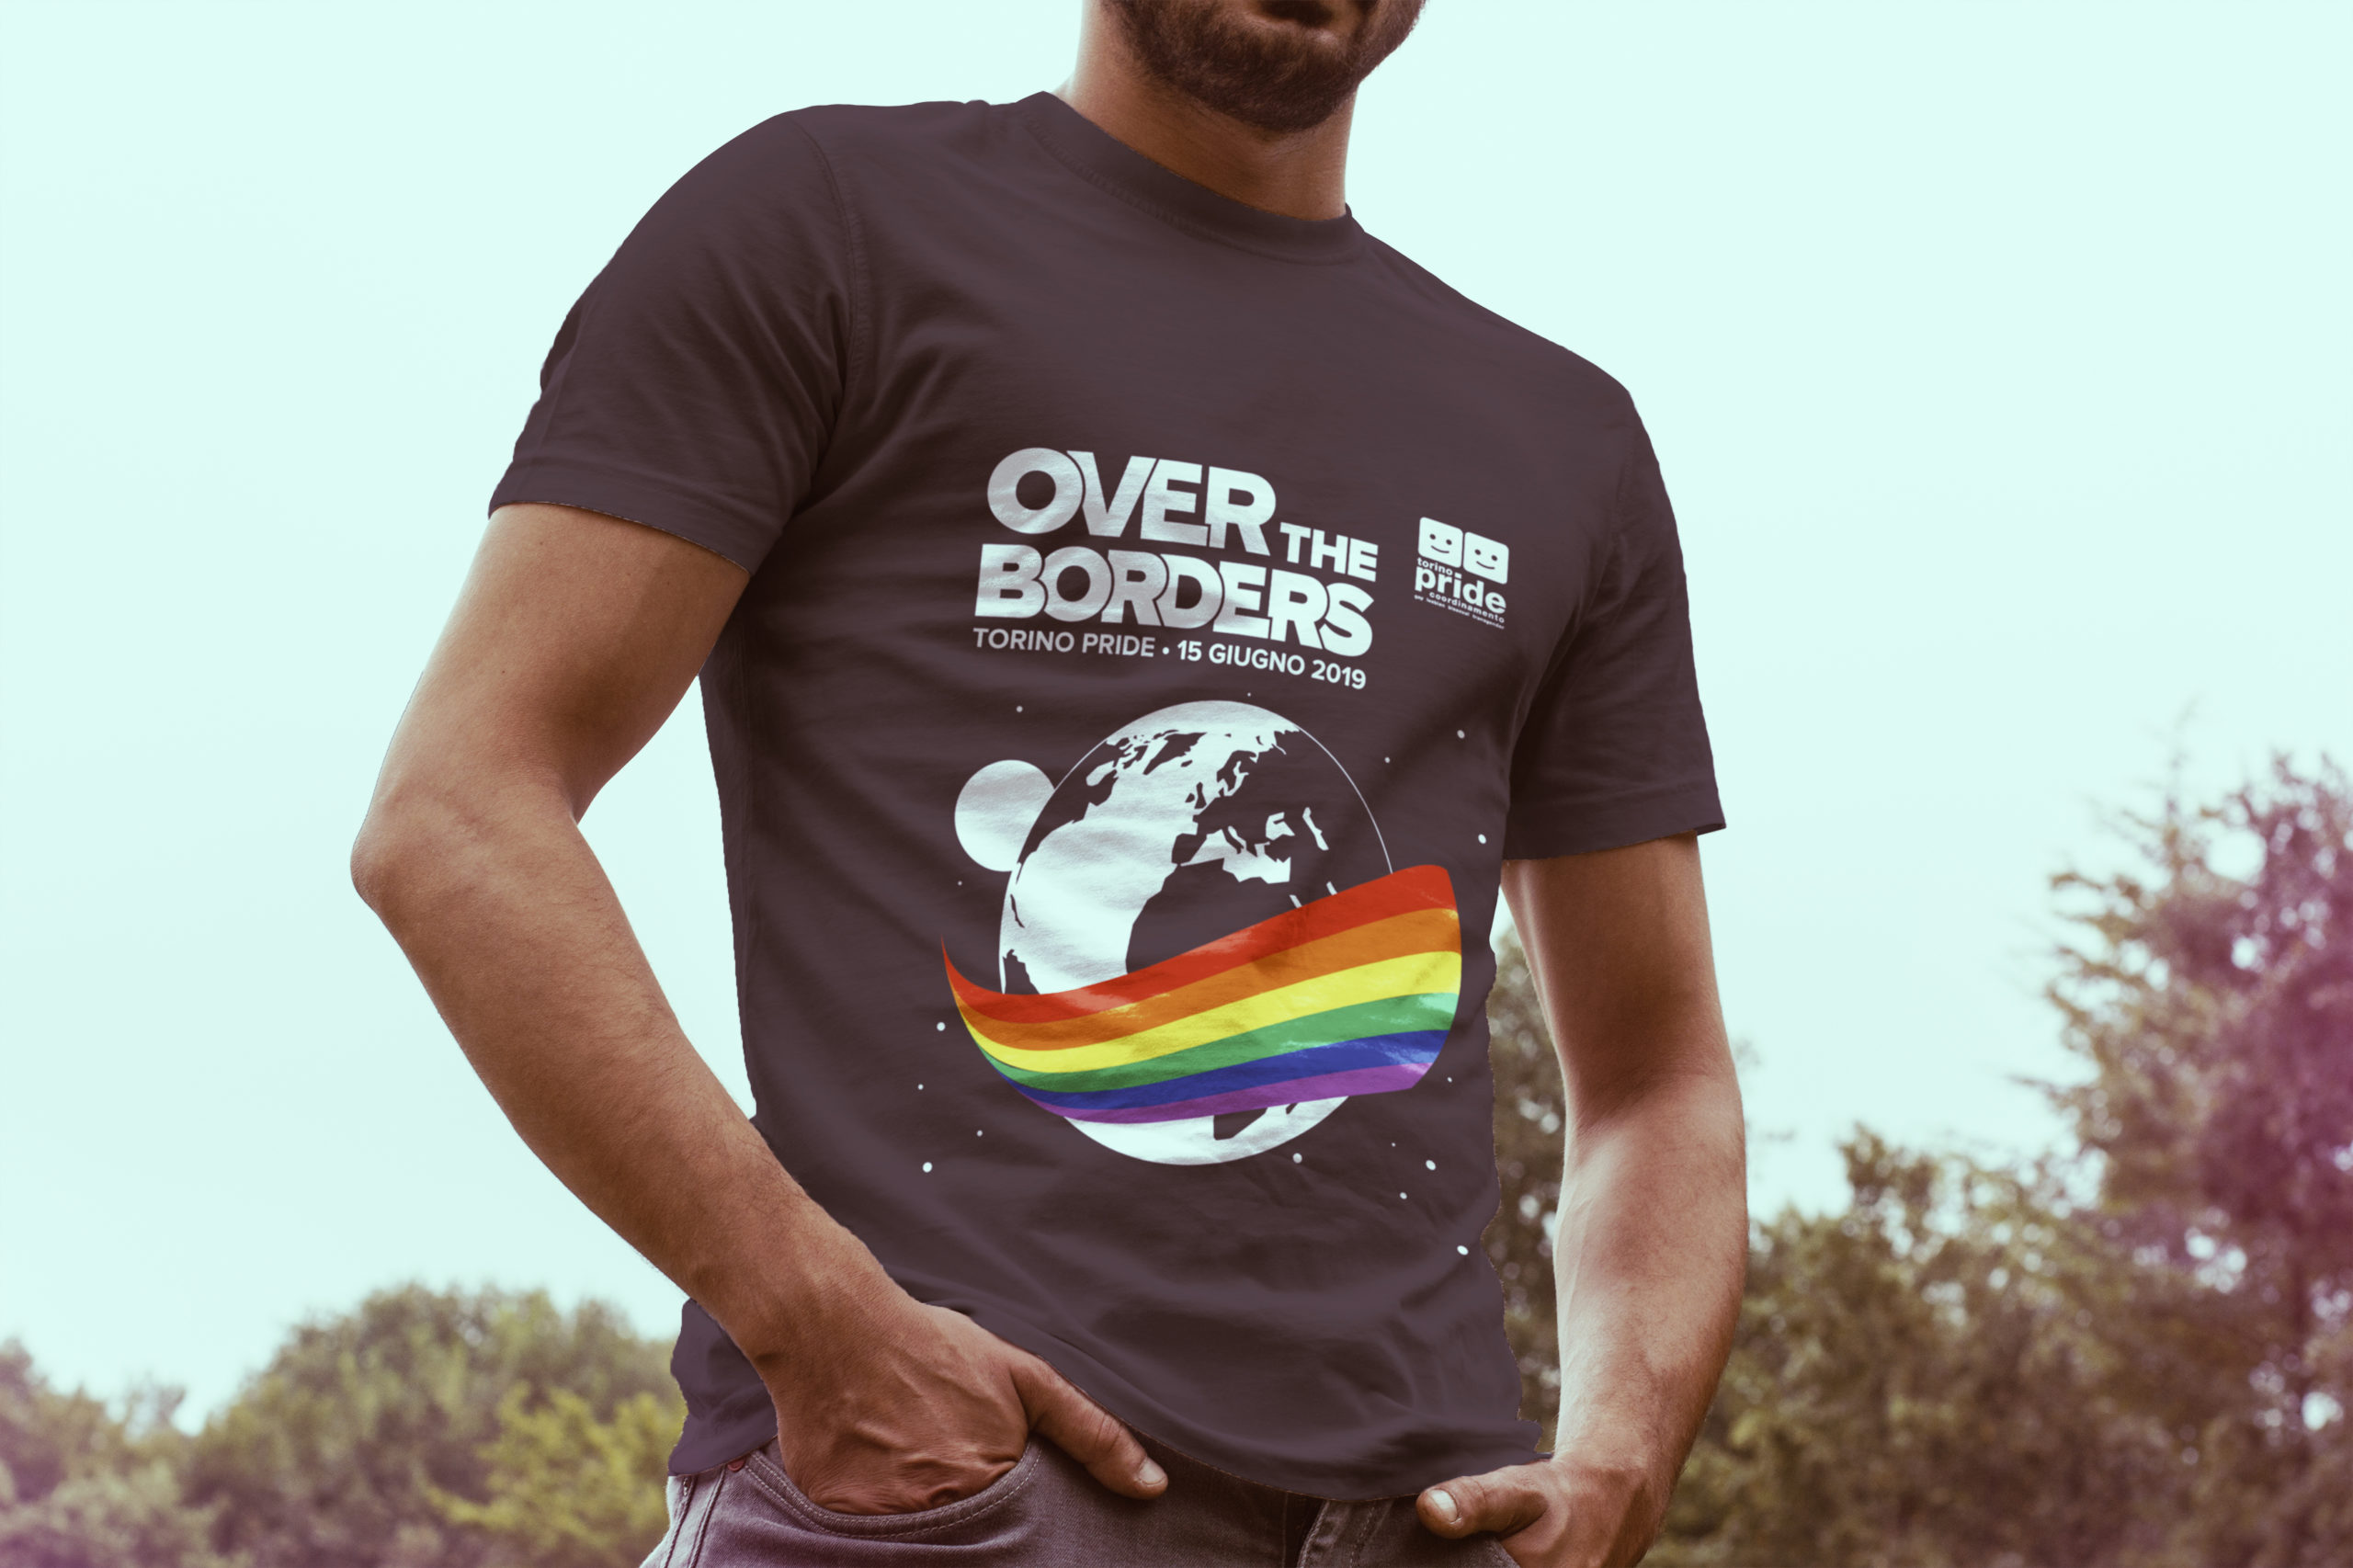 Tshirt rendering Torino Pride 2019, Over the borders